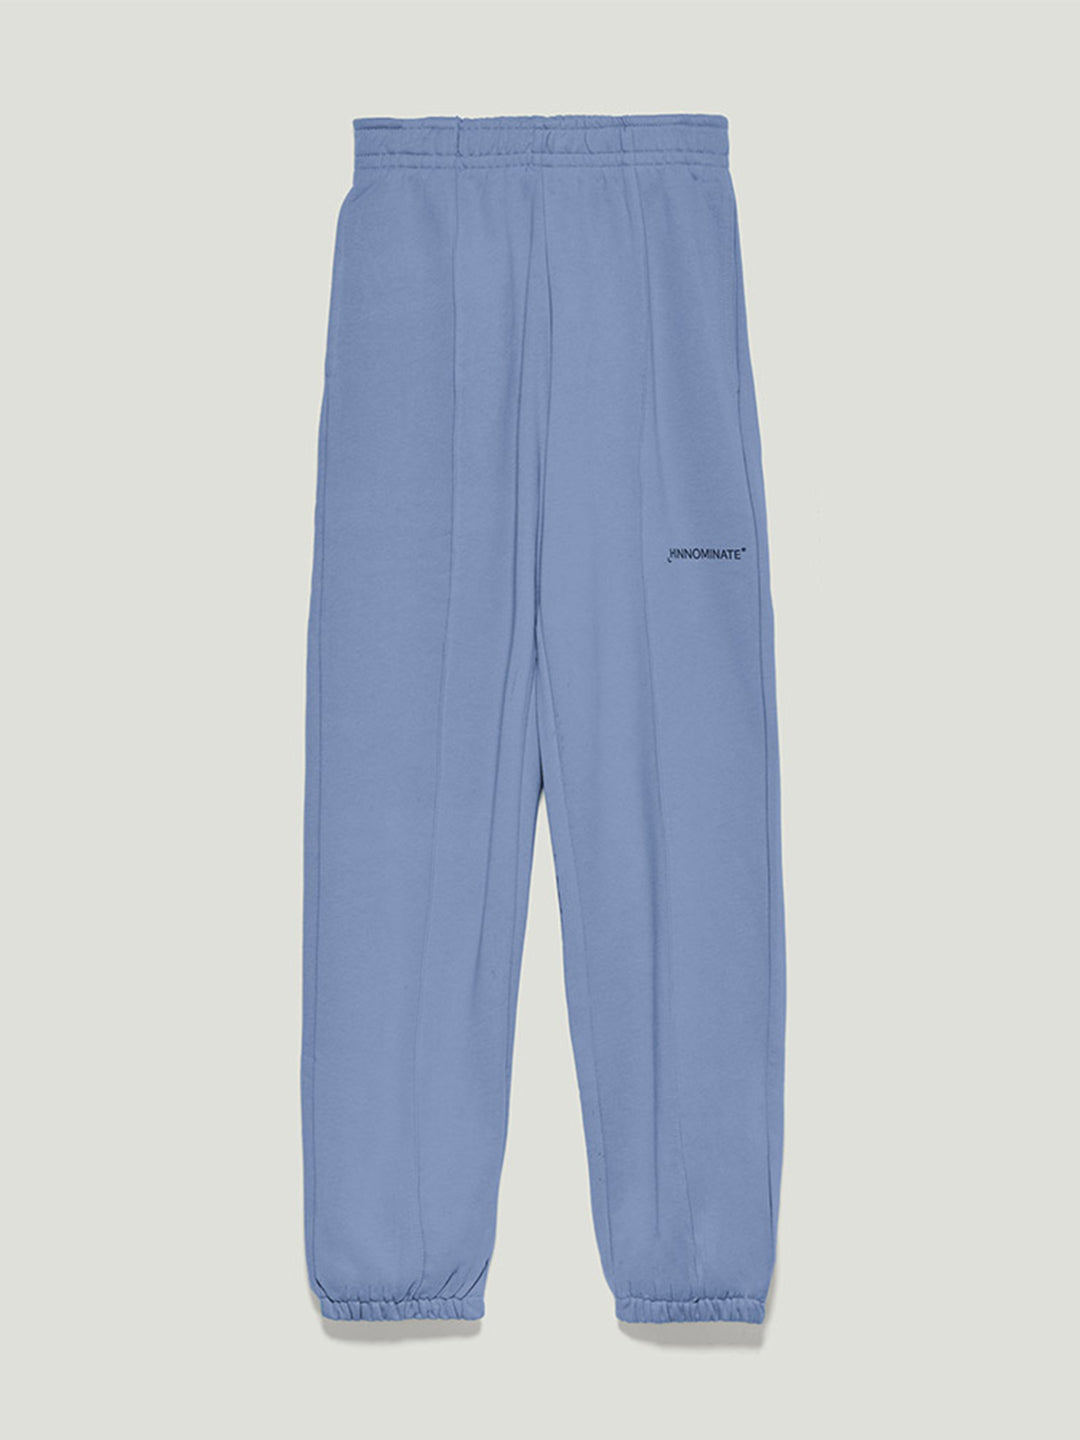 Hinnominate light blue fleece trousers